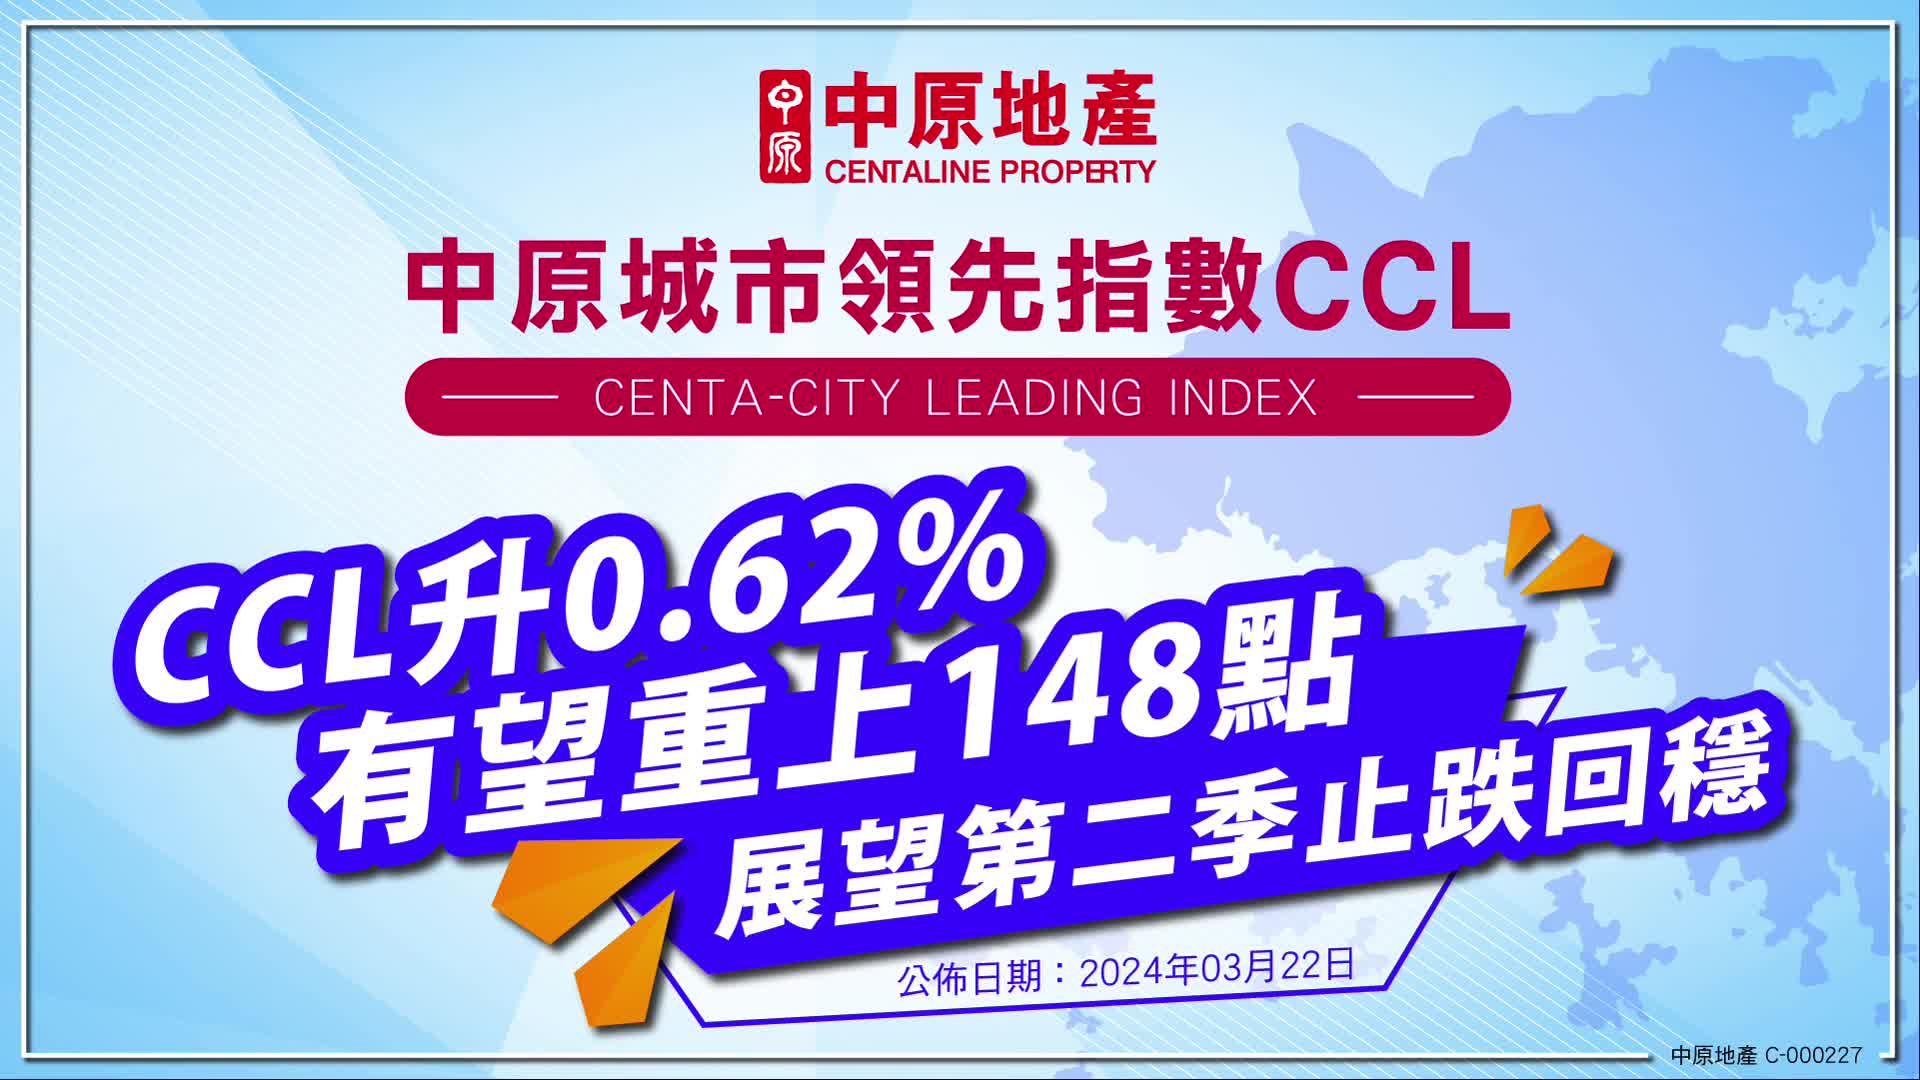 CCL升0.62%  有望重上148點 展望第二季止跌回穩